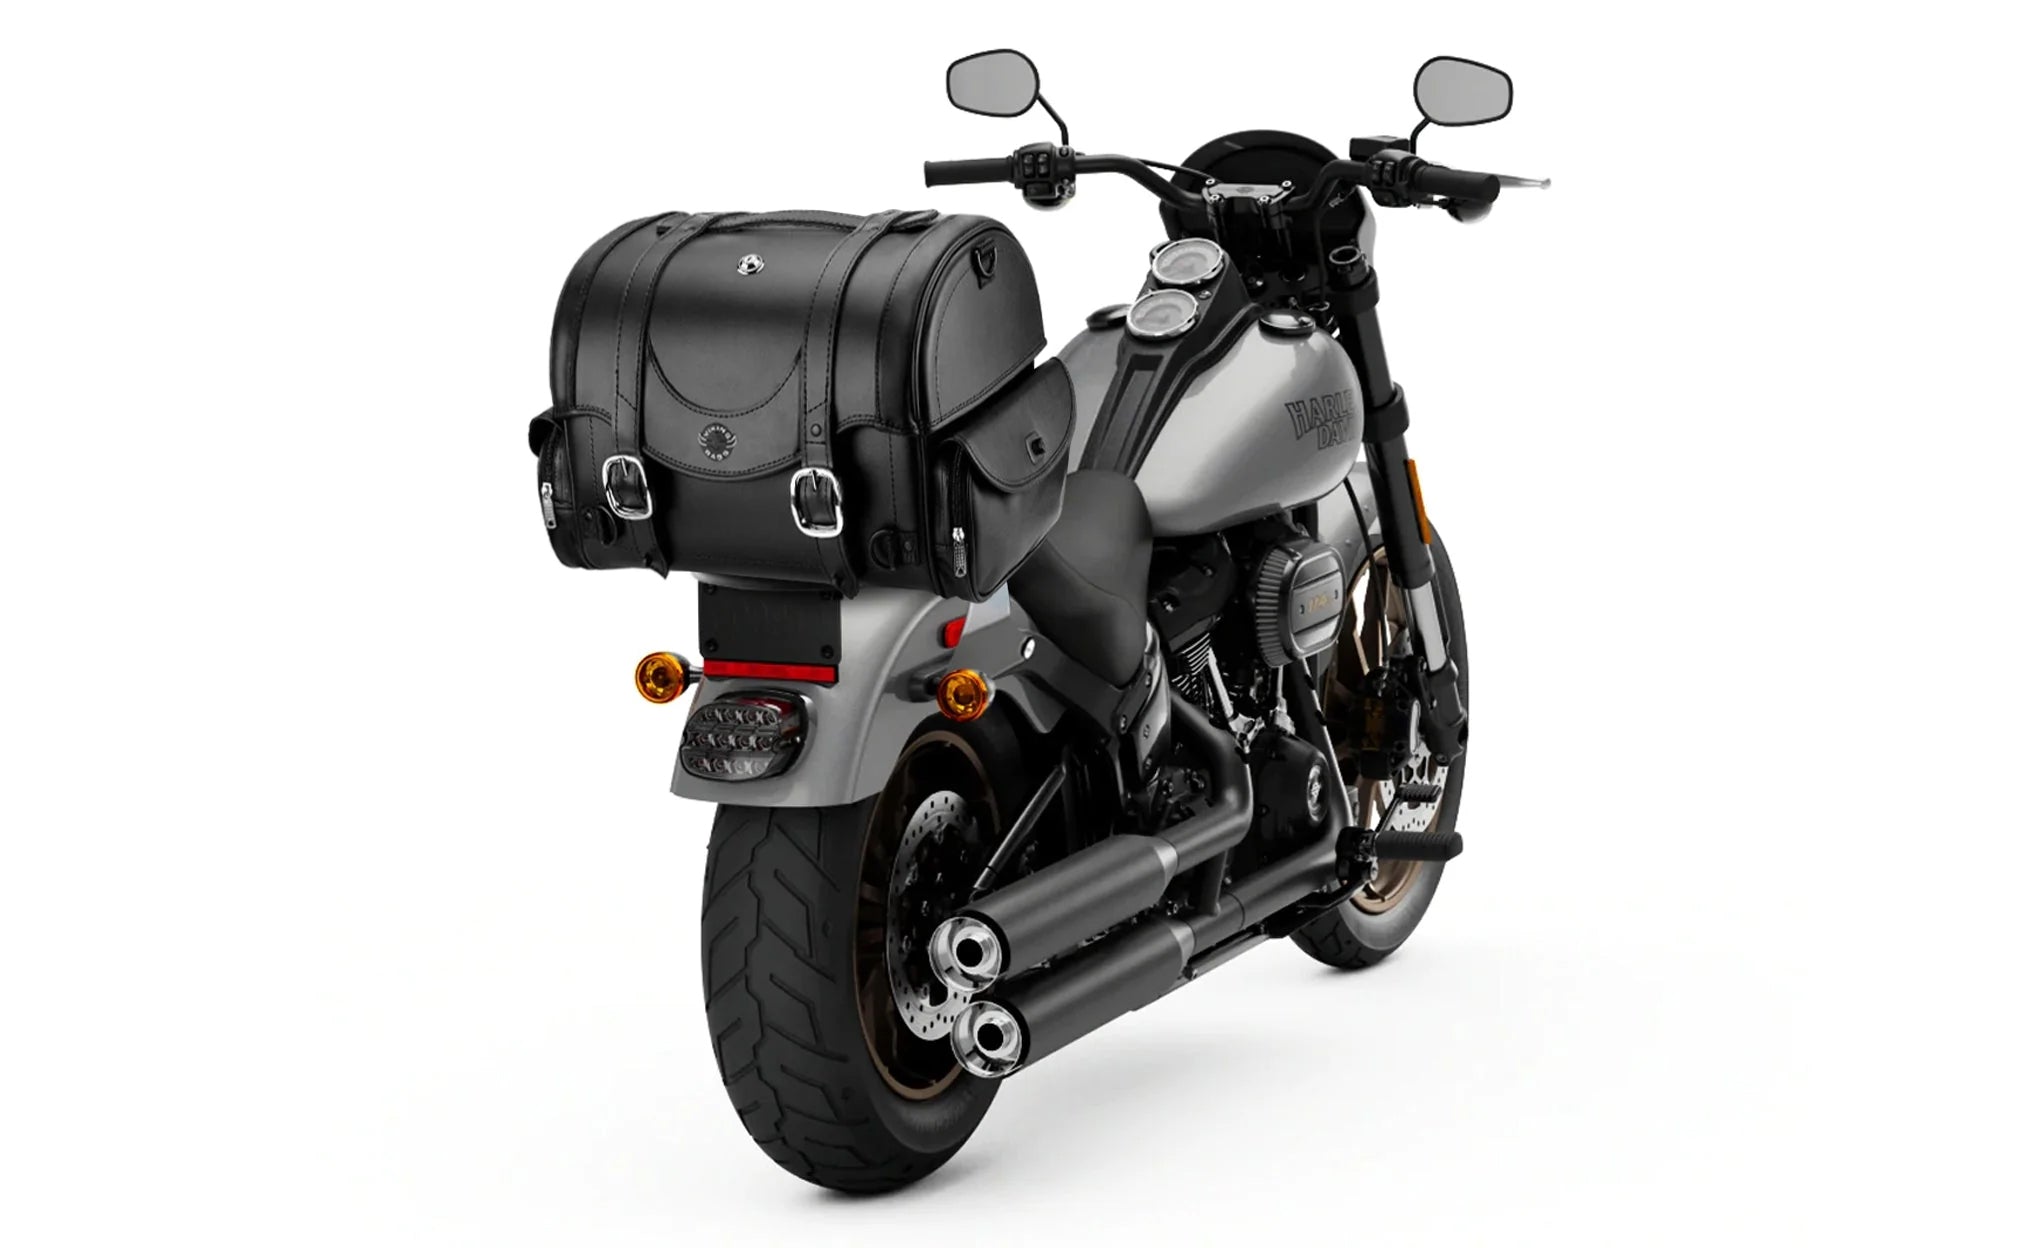 21L - Century Medium Kawasaki Leather Motorcycle Tail Bag on Bike Photo @expand